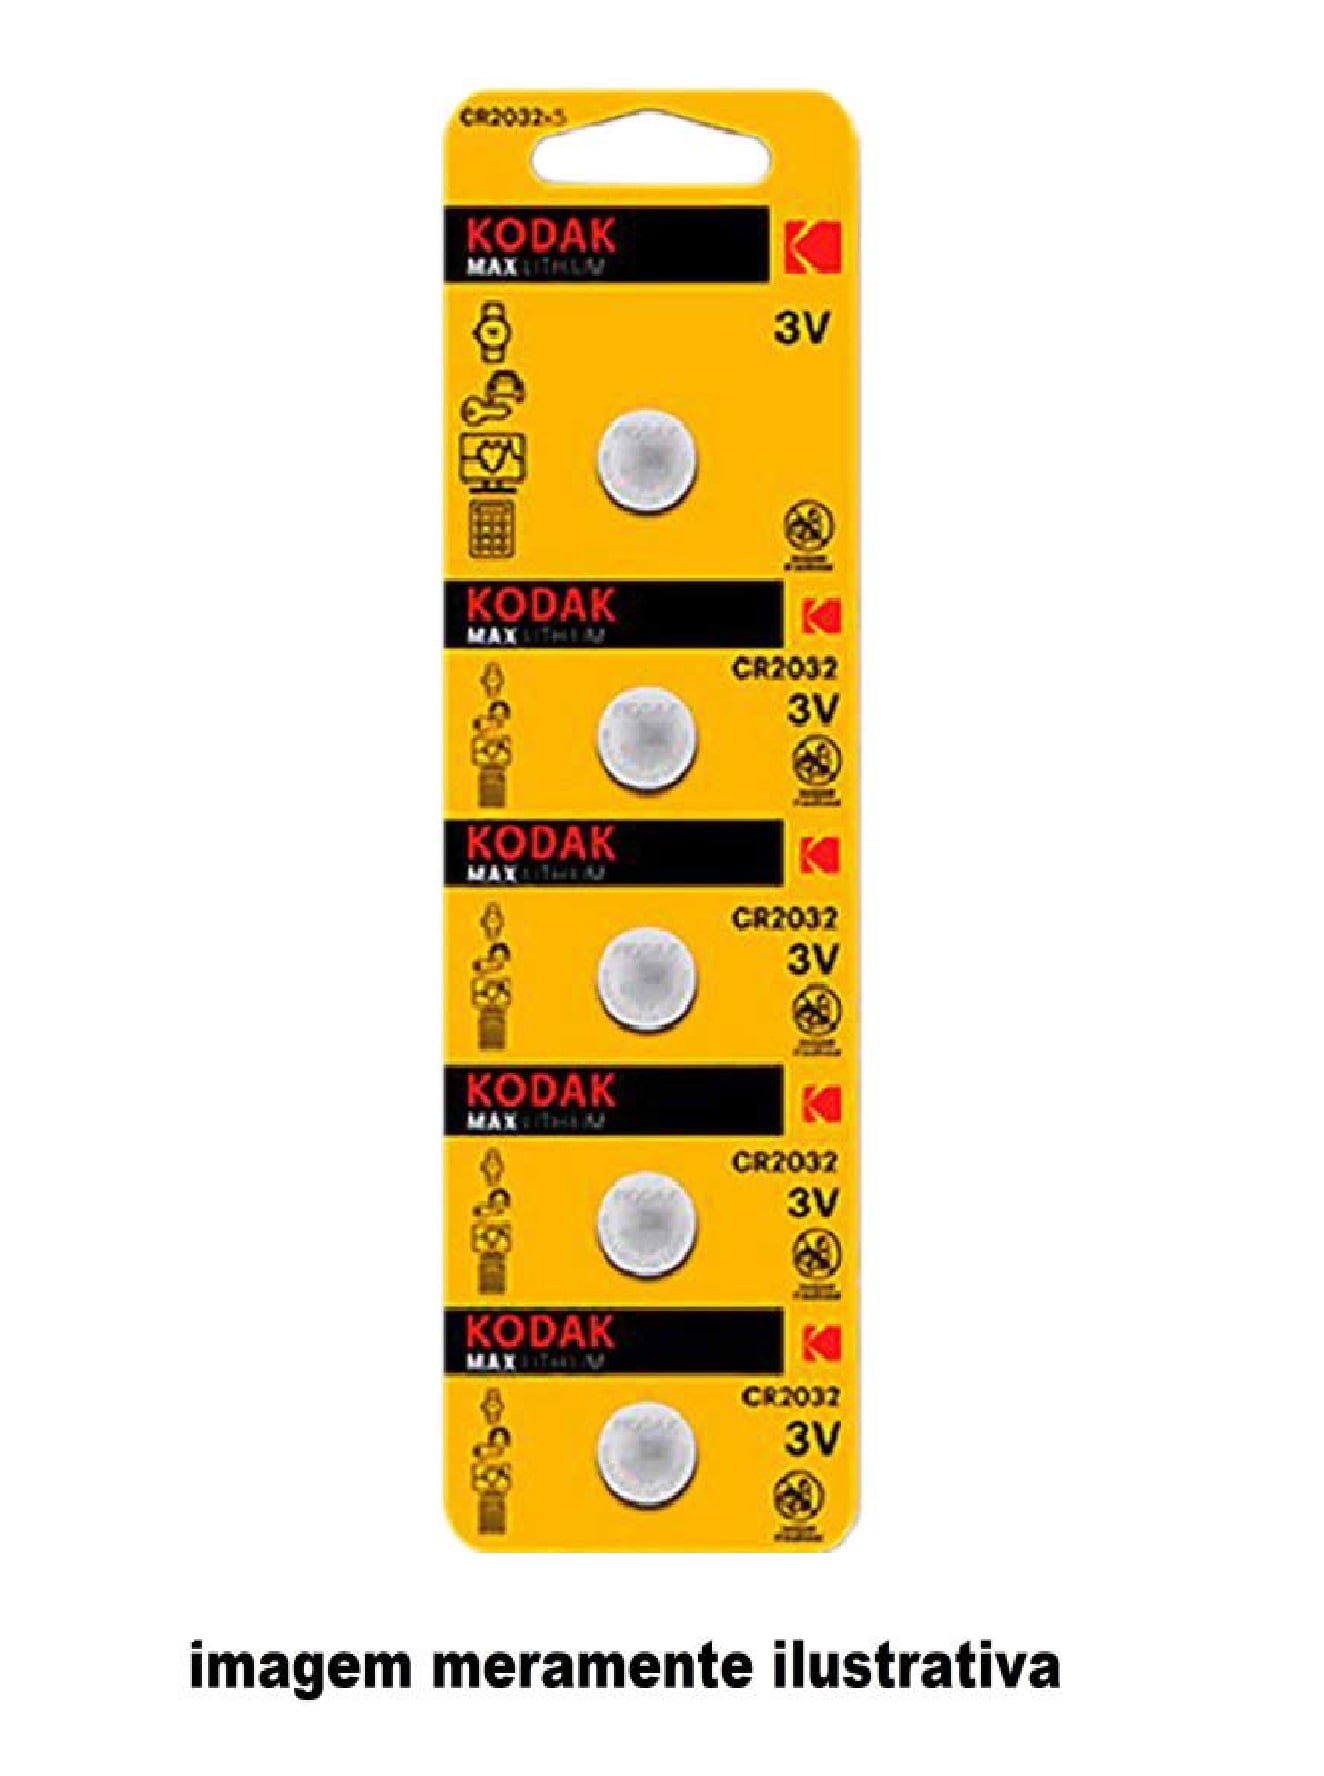 Kodak Max Lithium CR2032 5 Unidades Baterias